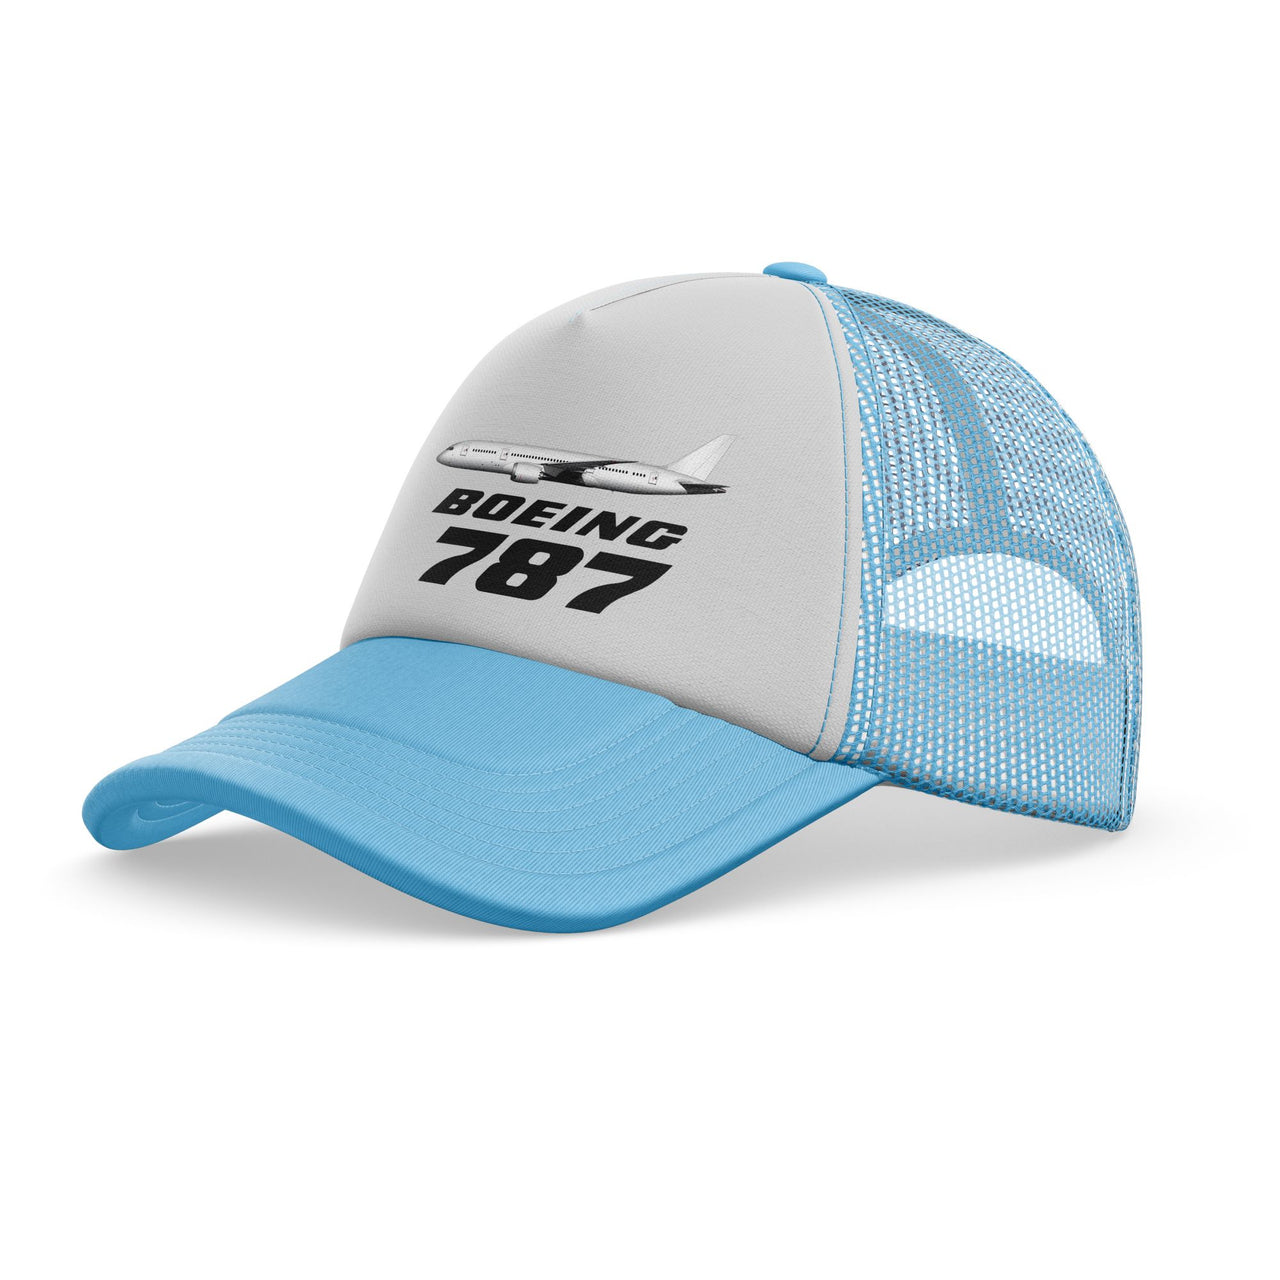 The Boeing 787 Designed Trucker Caps & Hats